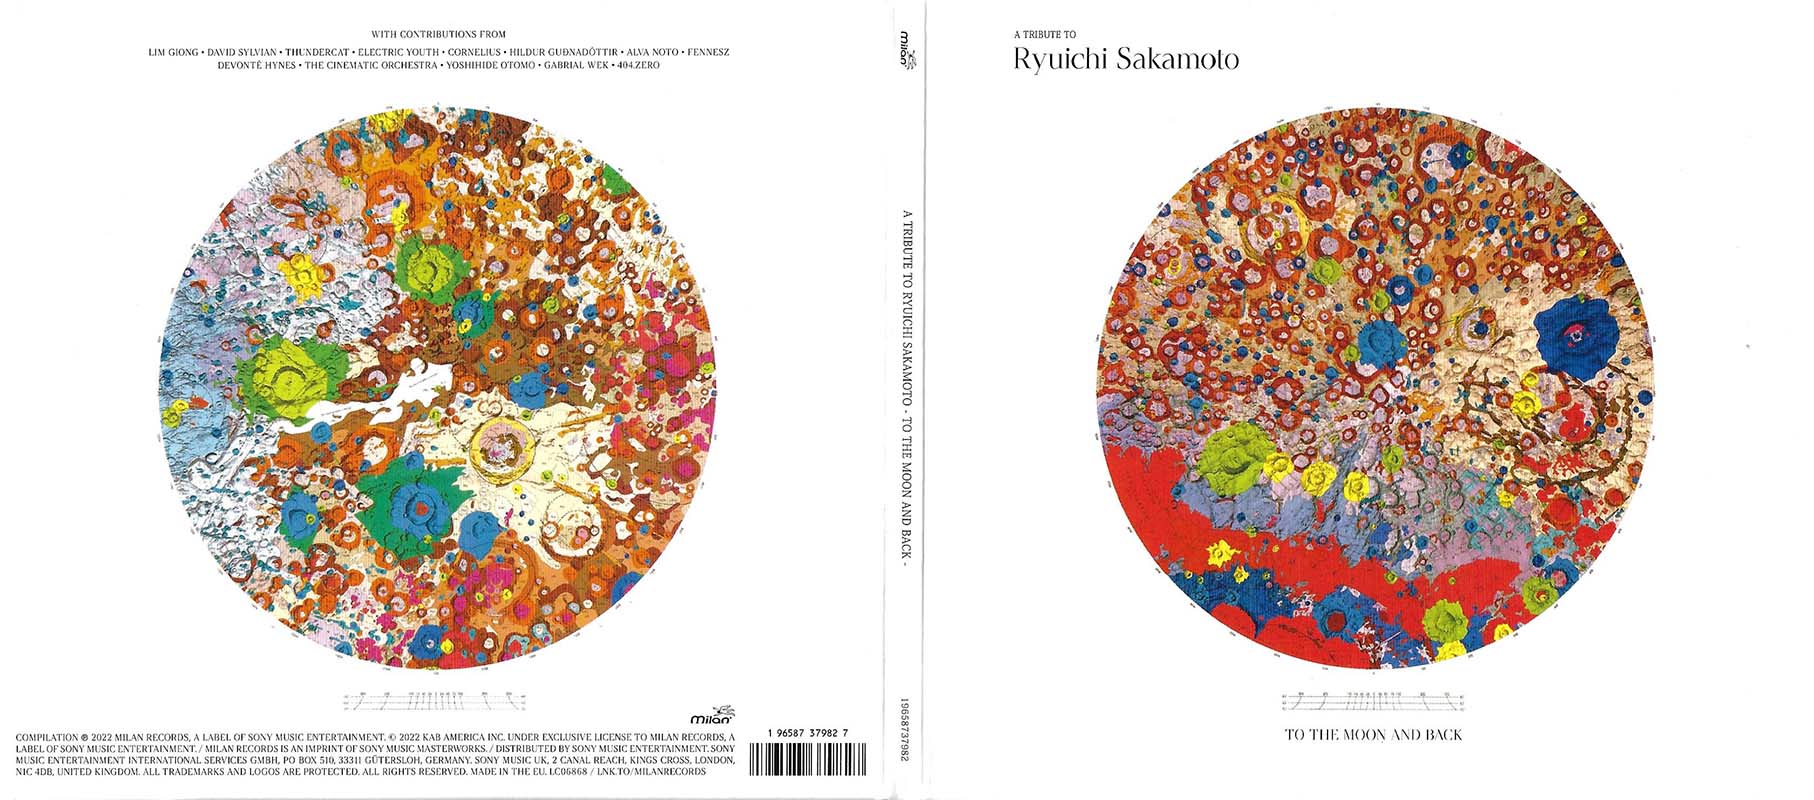 A Tribute to Ryuichi Sakamoto - To the Moon and Back by Ryuichi Sakamoto on  TIDAL